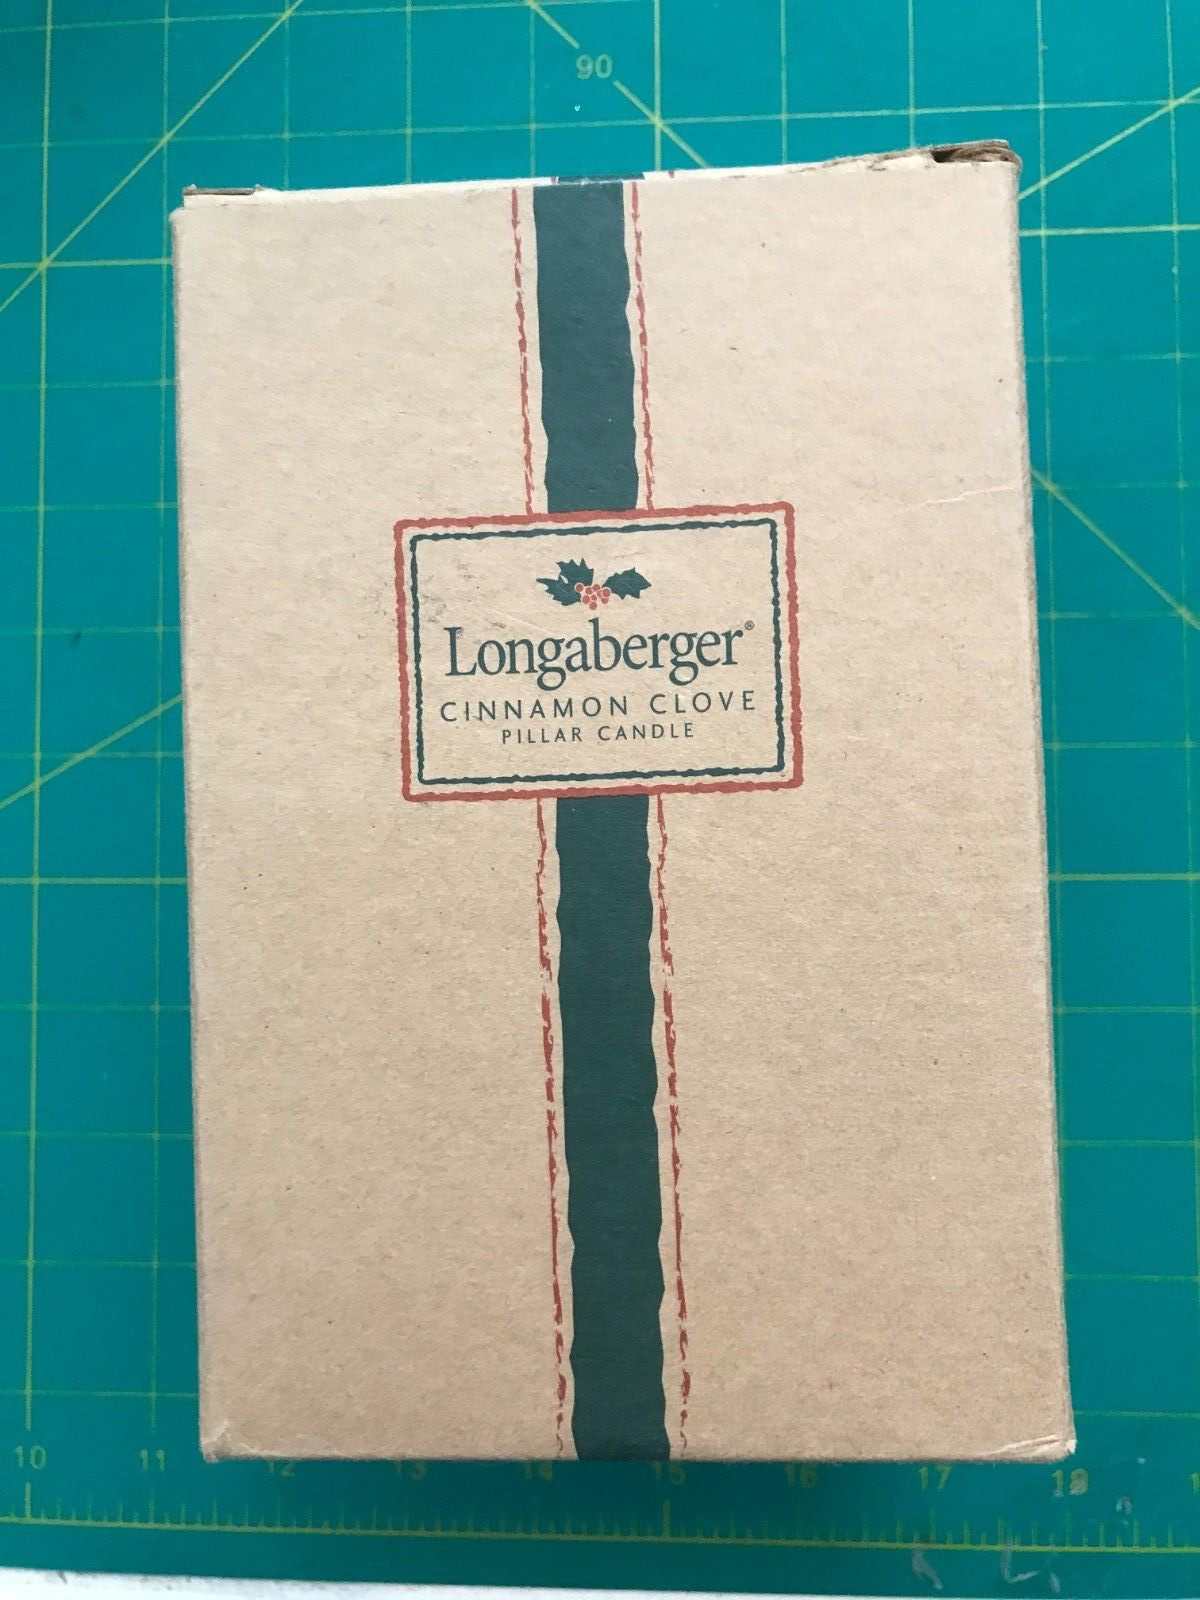 Longaberger 90011 6-inch Cinnamon Clove Pillar Candle - 2002 - NEW IN BOX